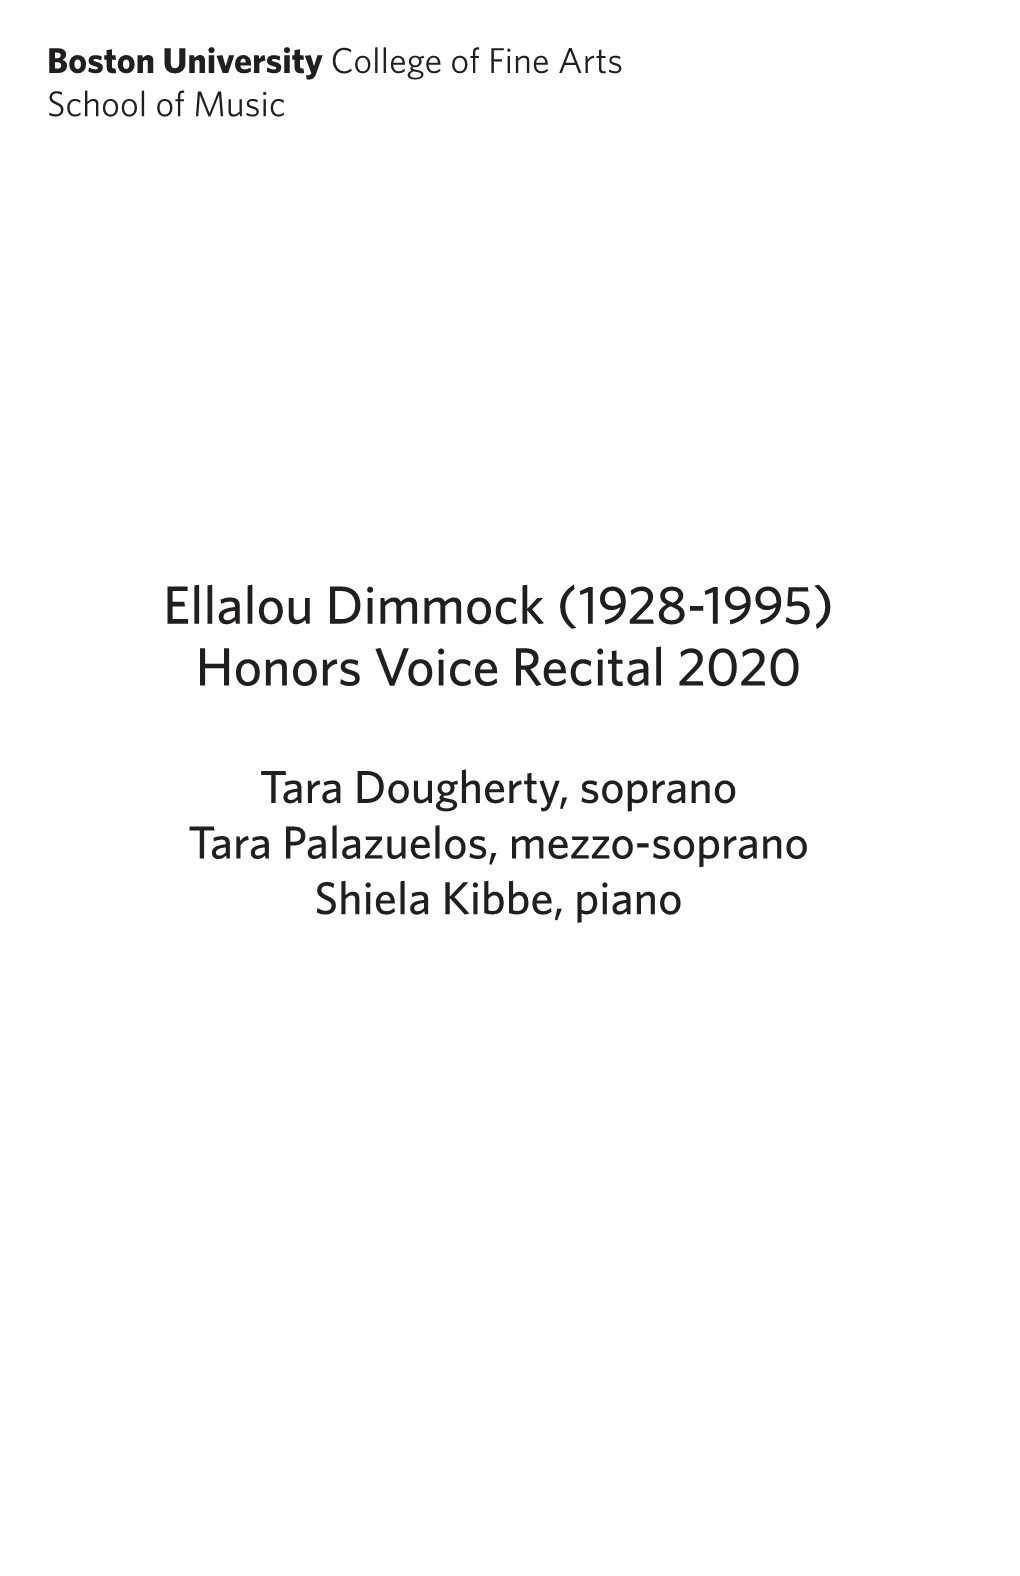 Ellalou Dimmock (1928-1995) Honors Voice Recital 2020